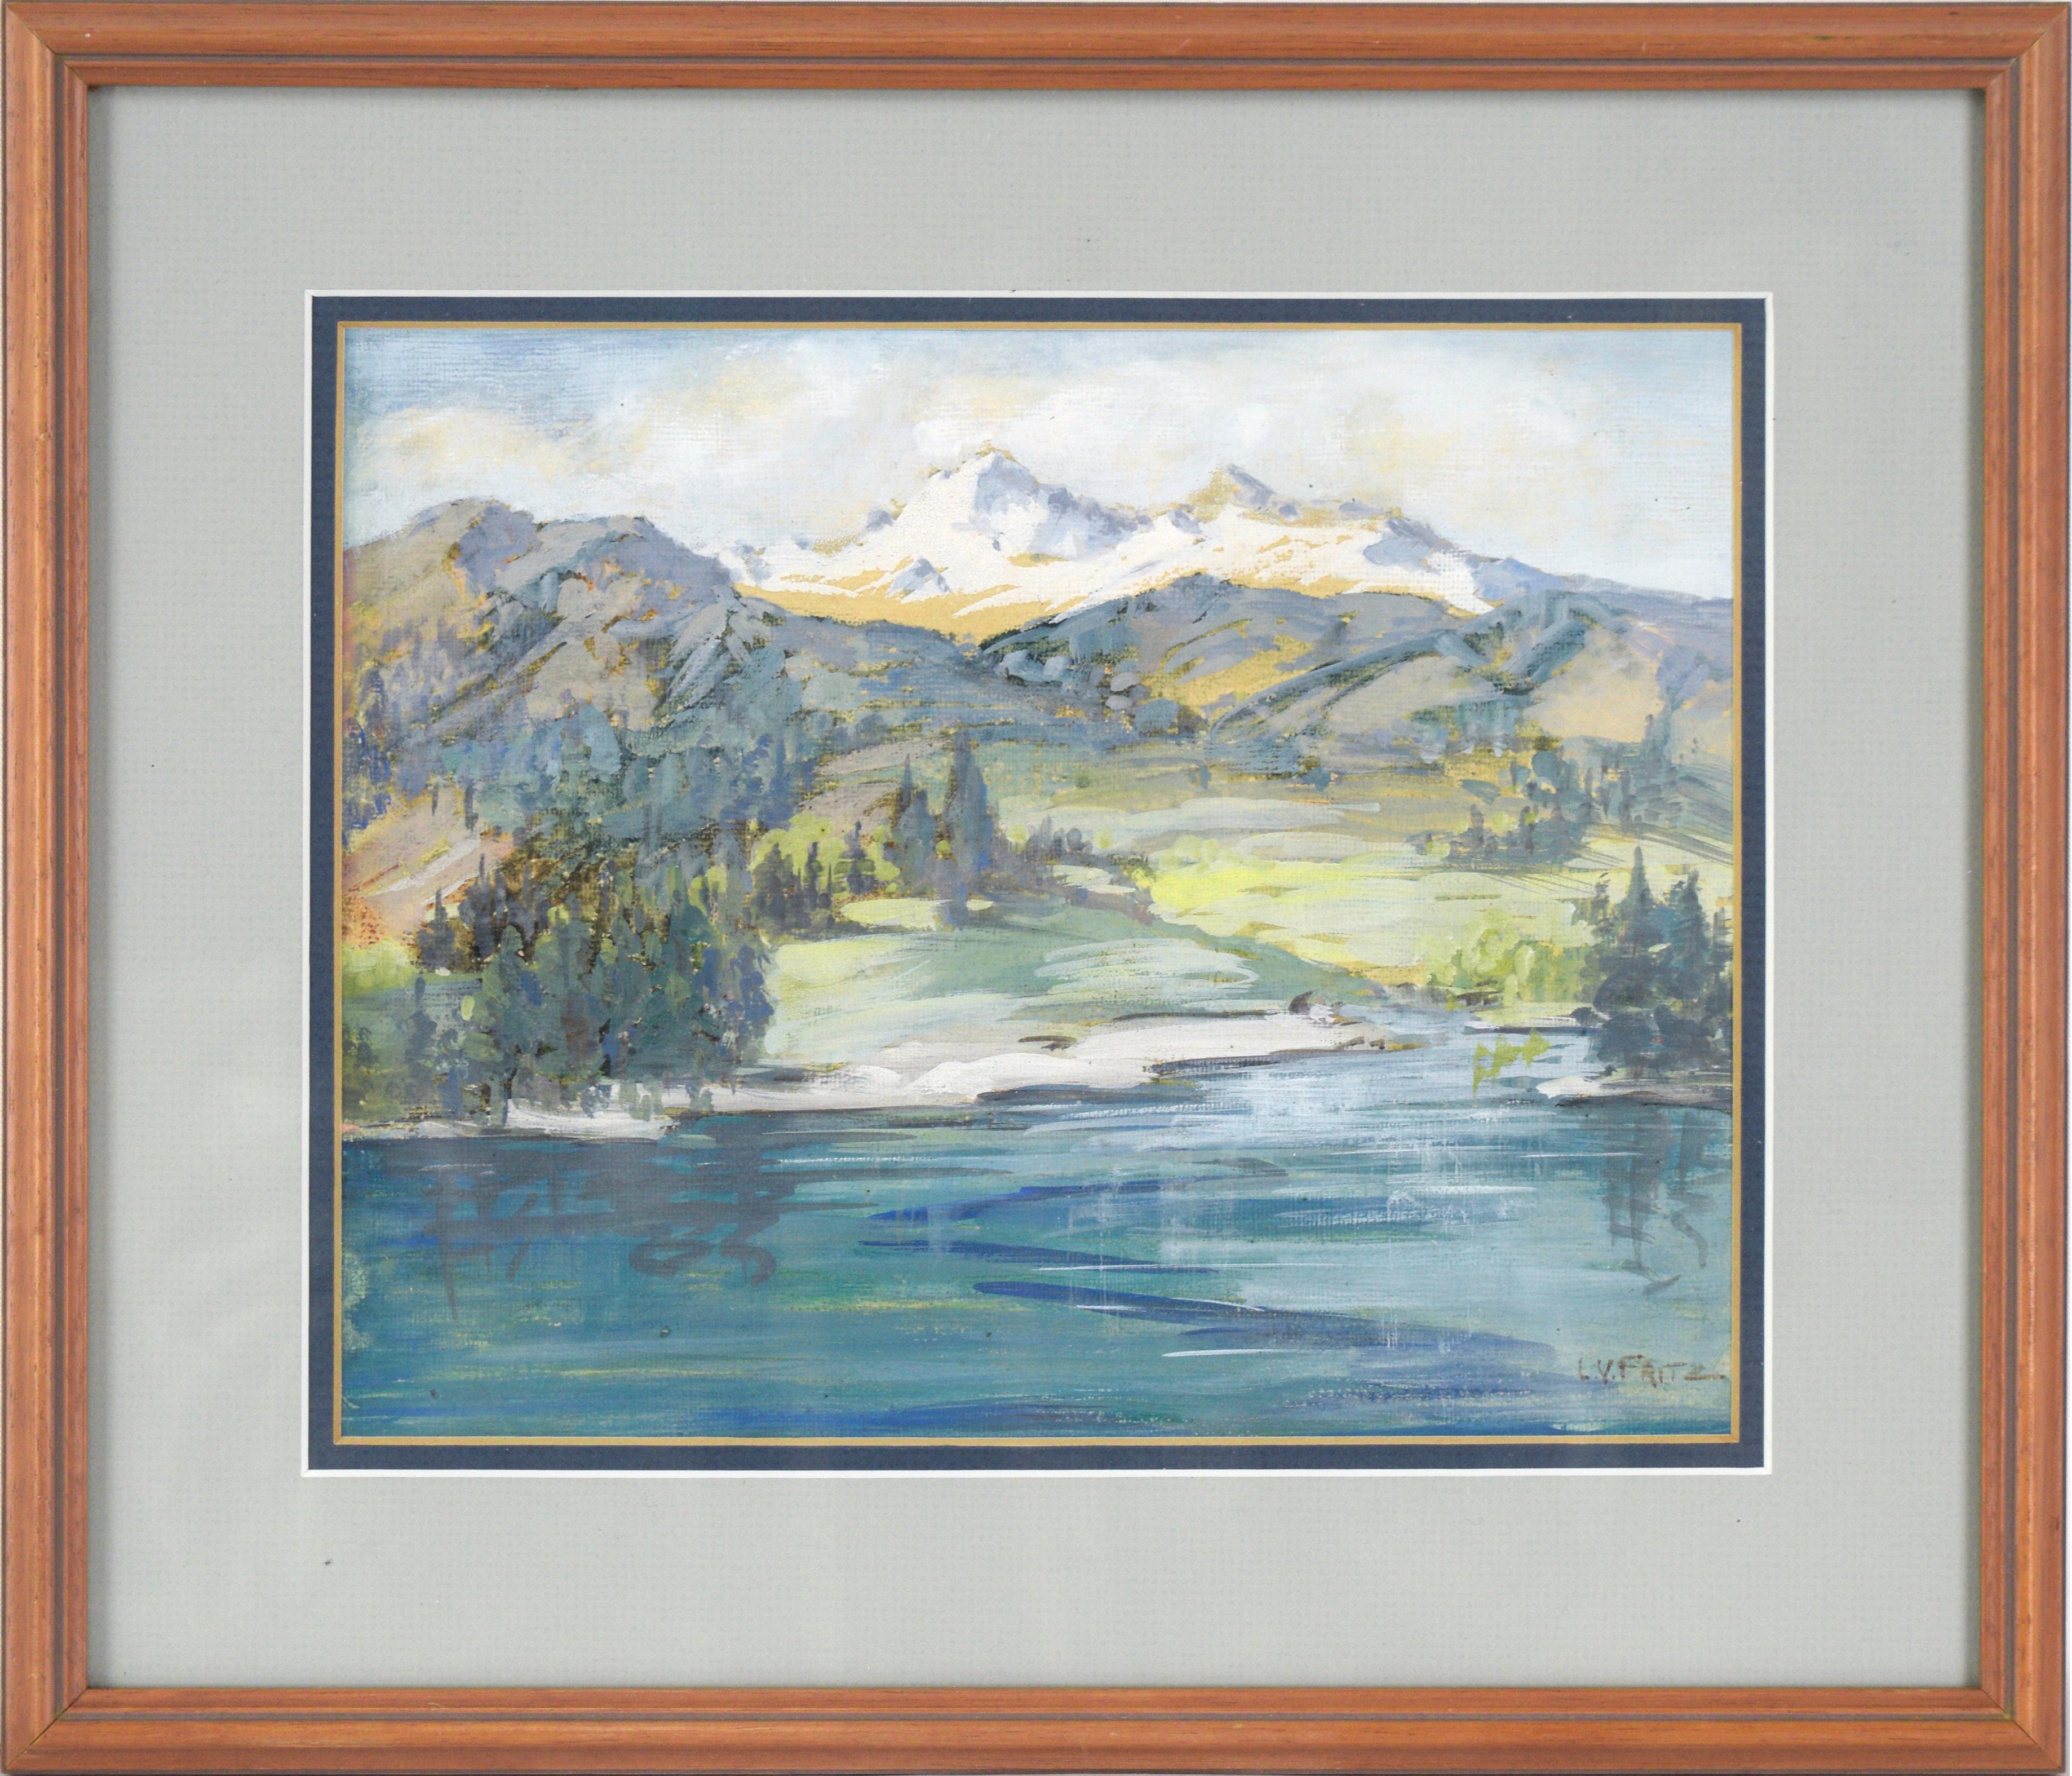 L. V. Fritz Landscape Painting - Three Sisters, Oregon - Lakeside Landscape